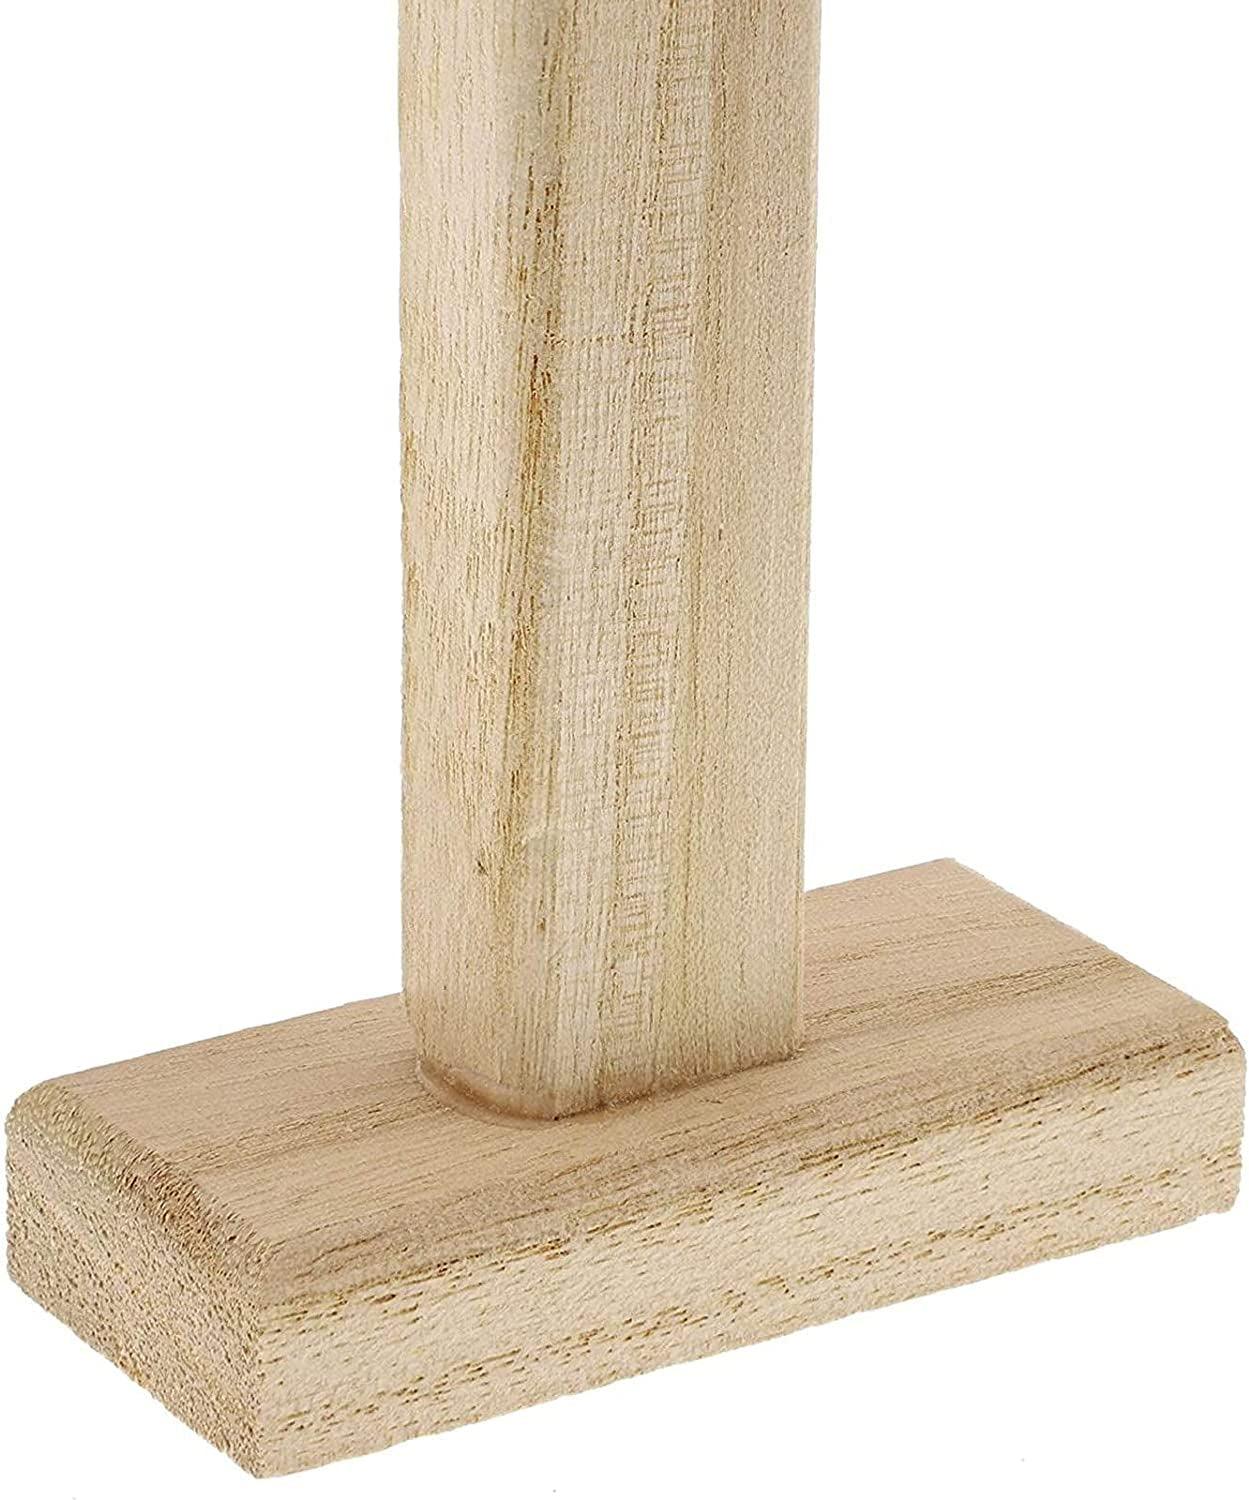 Wood Crosses for Crafts, Wooden Cross (8.7 In, 3-Pack) - WoodArtSupply